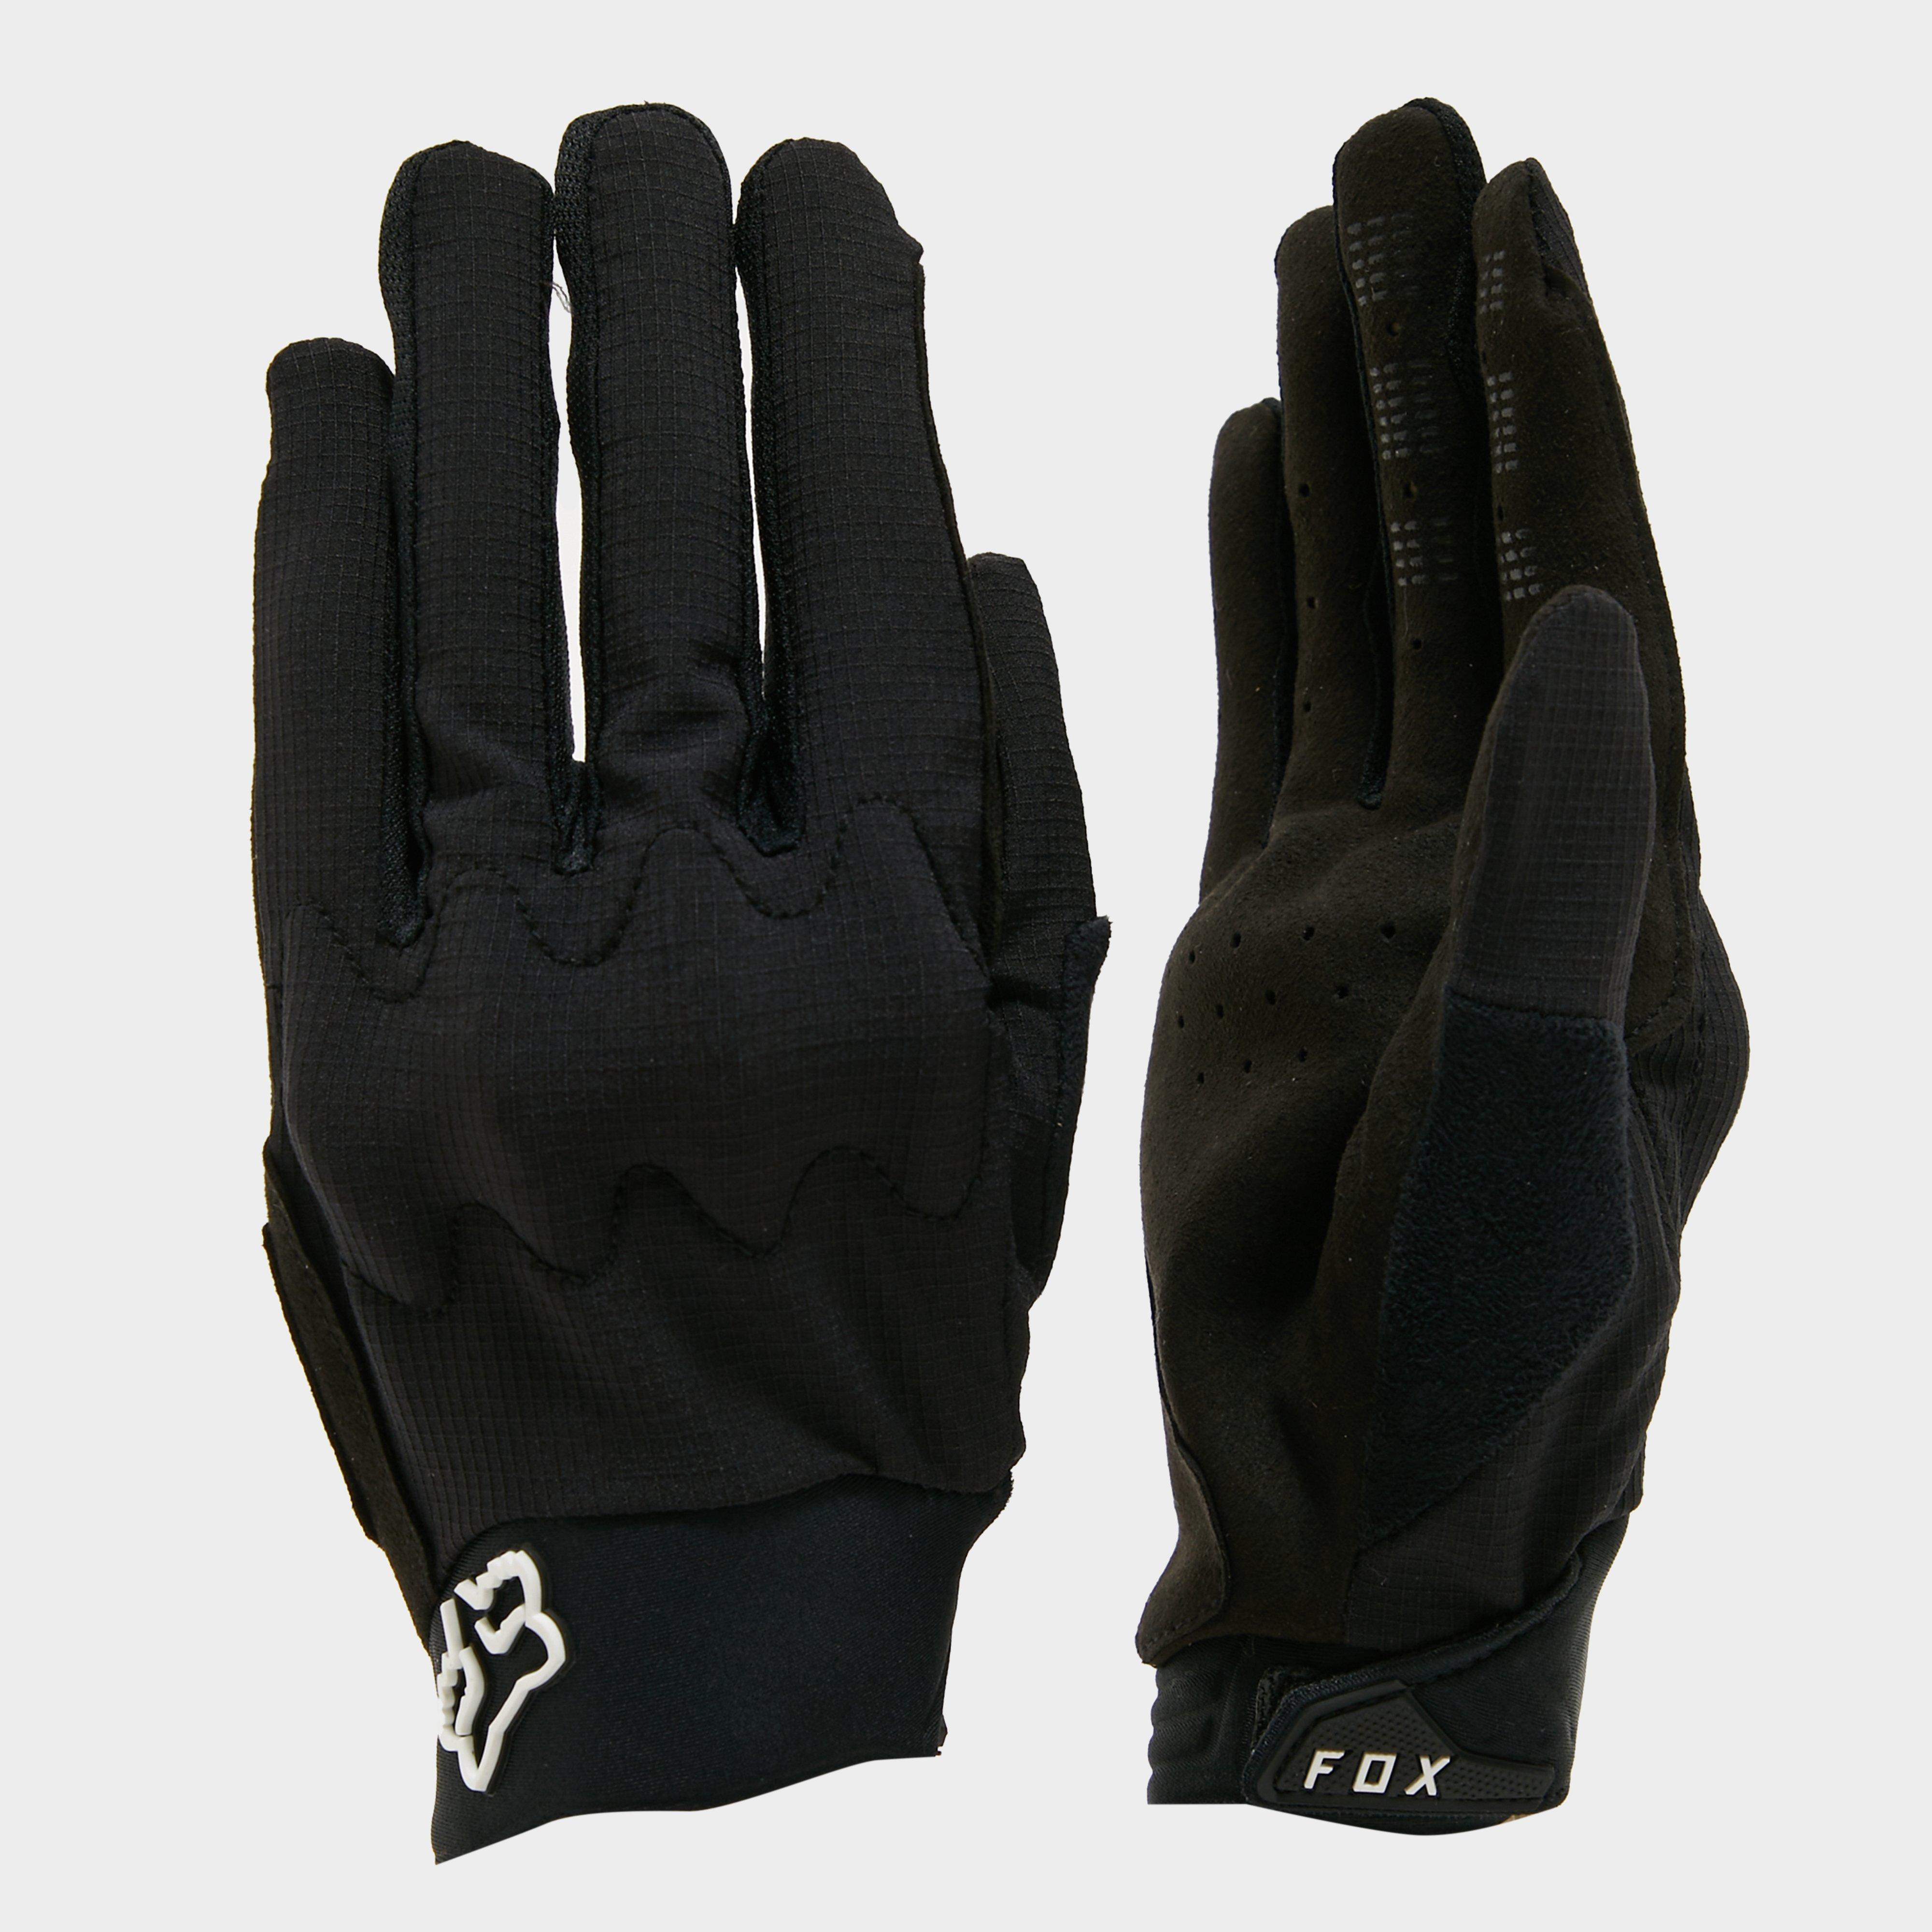  Fox Defend D30 Gloves, Black